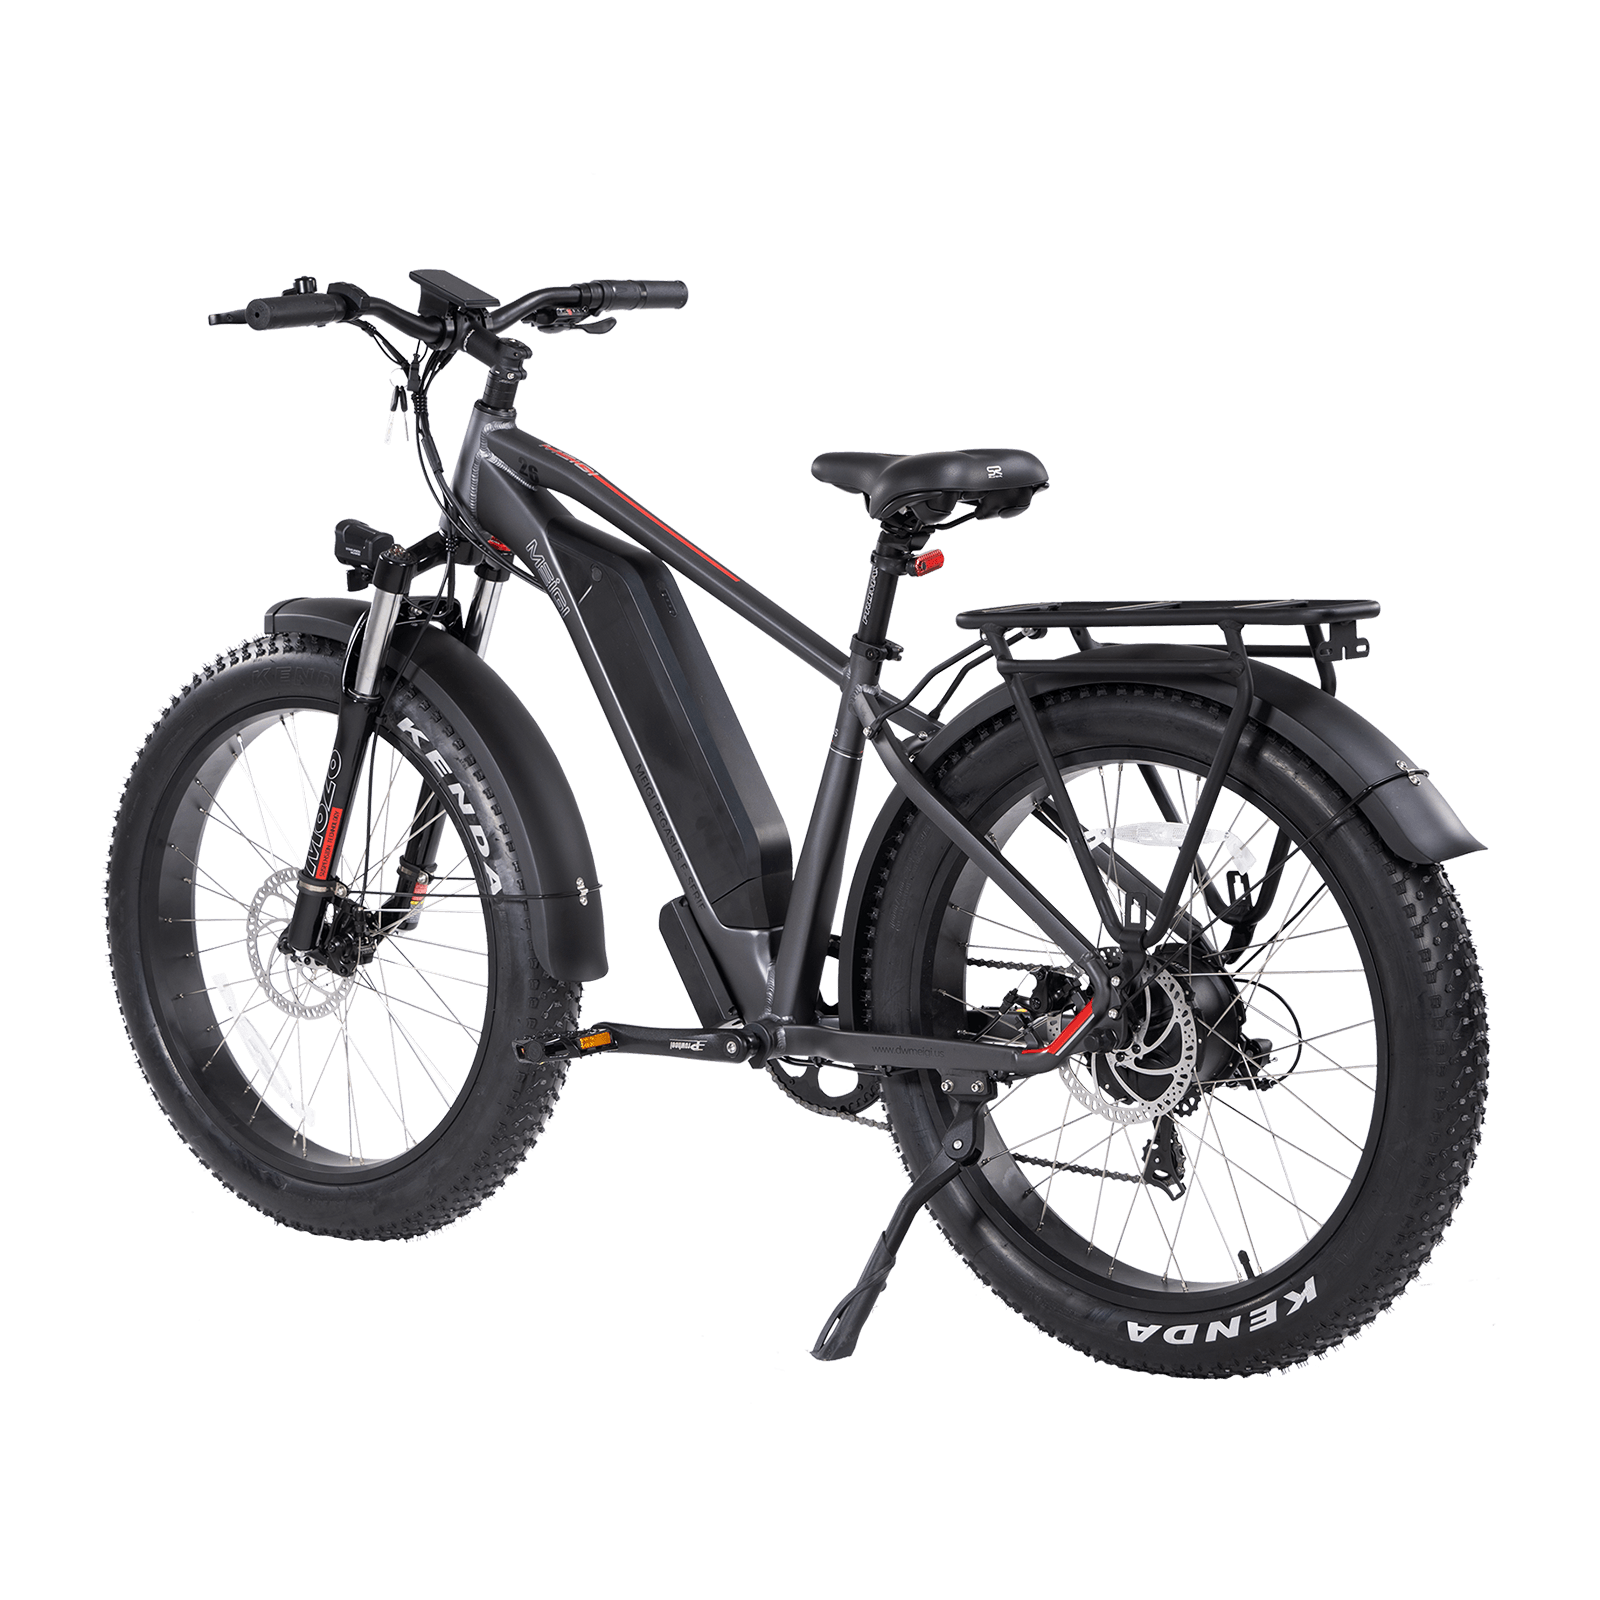 MG8713-PEGASUS Step-Thru Electric Bike - DWMEIGI